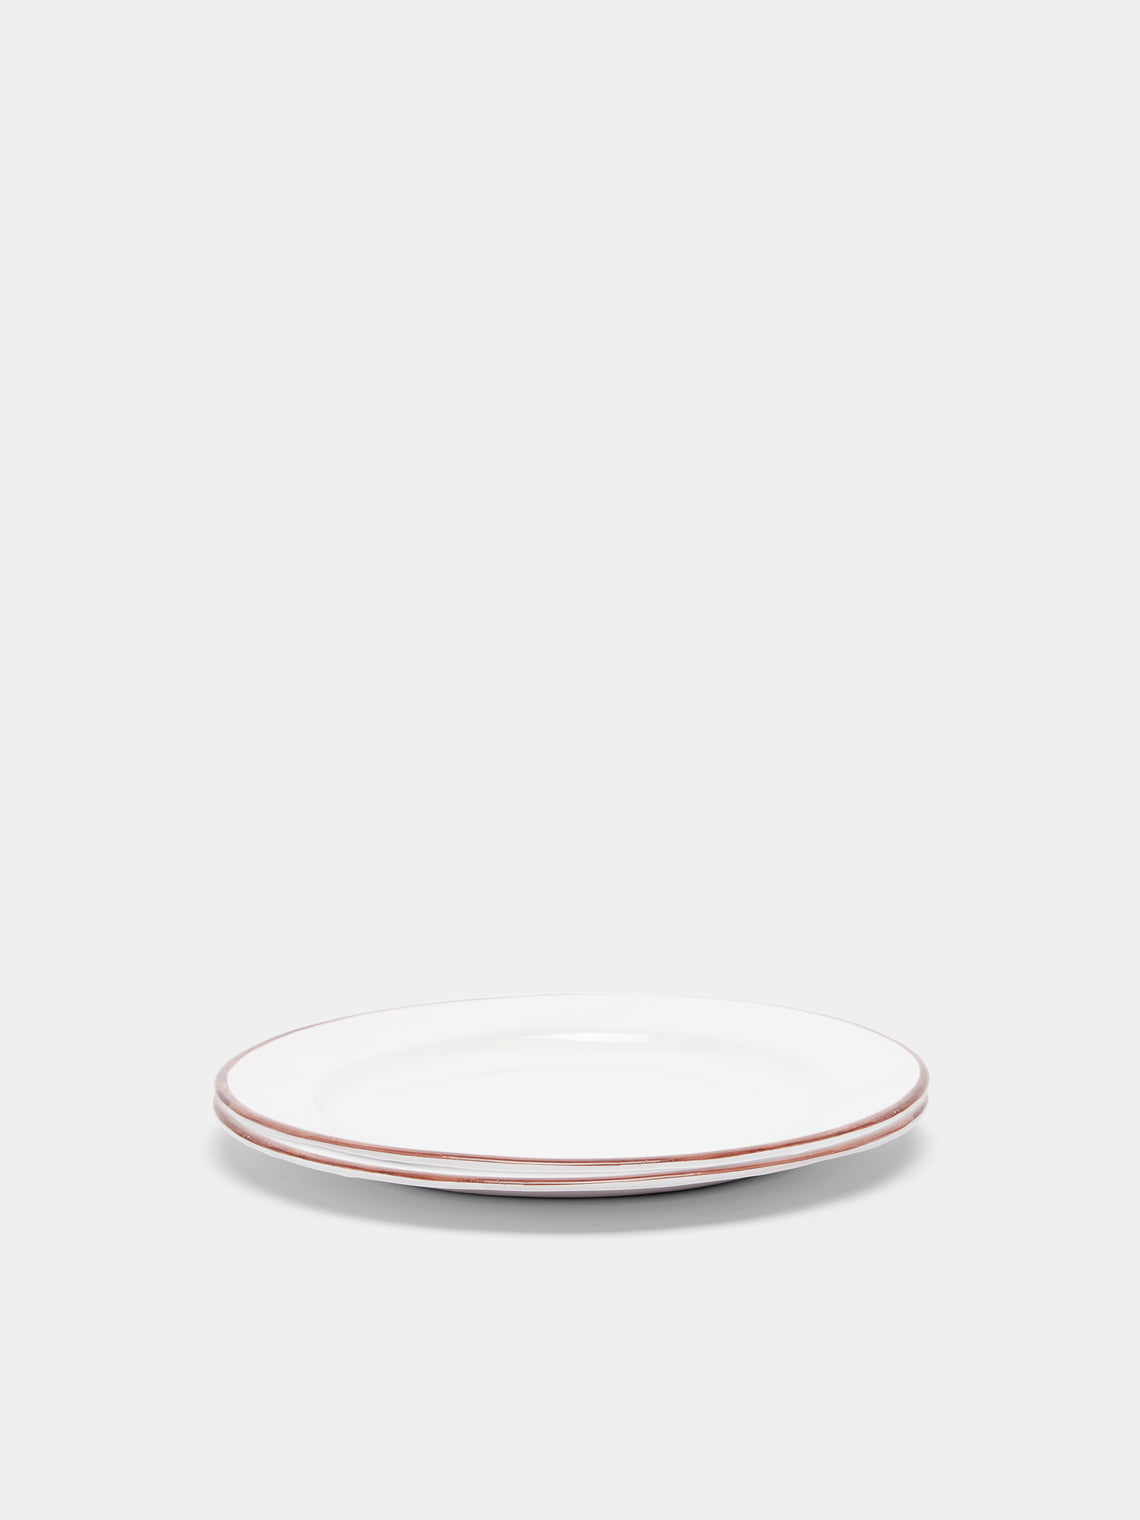 Z.d.G - L'Horizon Hand-Painted Ceramic Dinner Plates (Set of 2) - Brown - ABASK